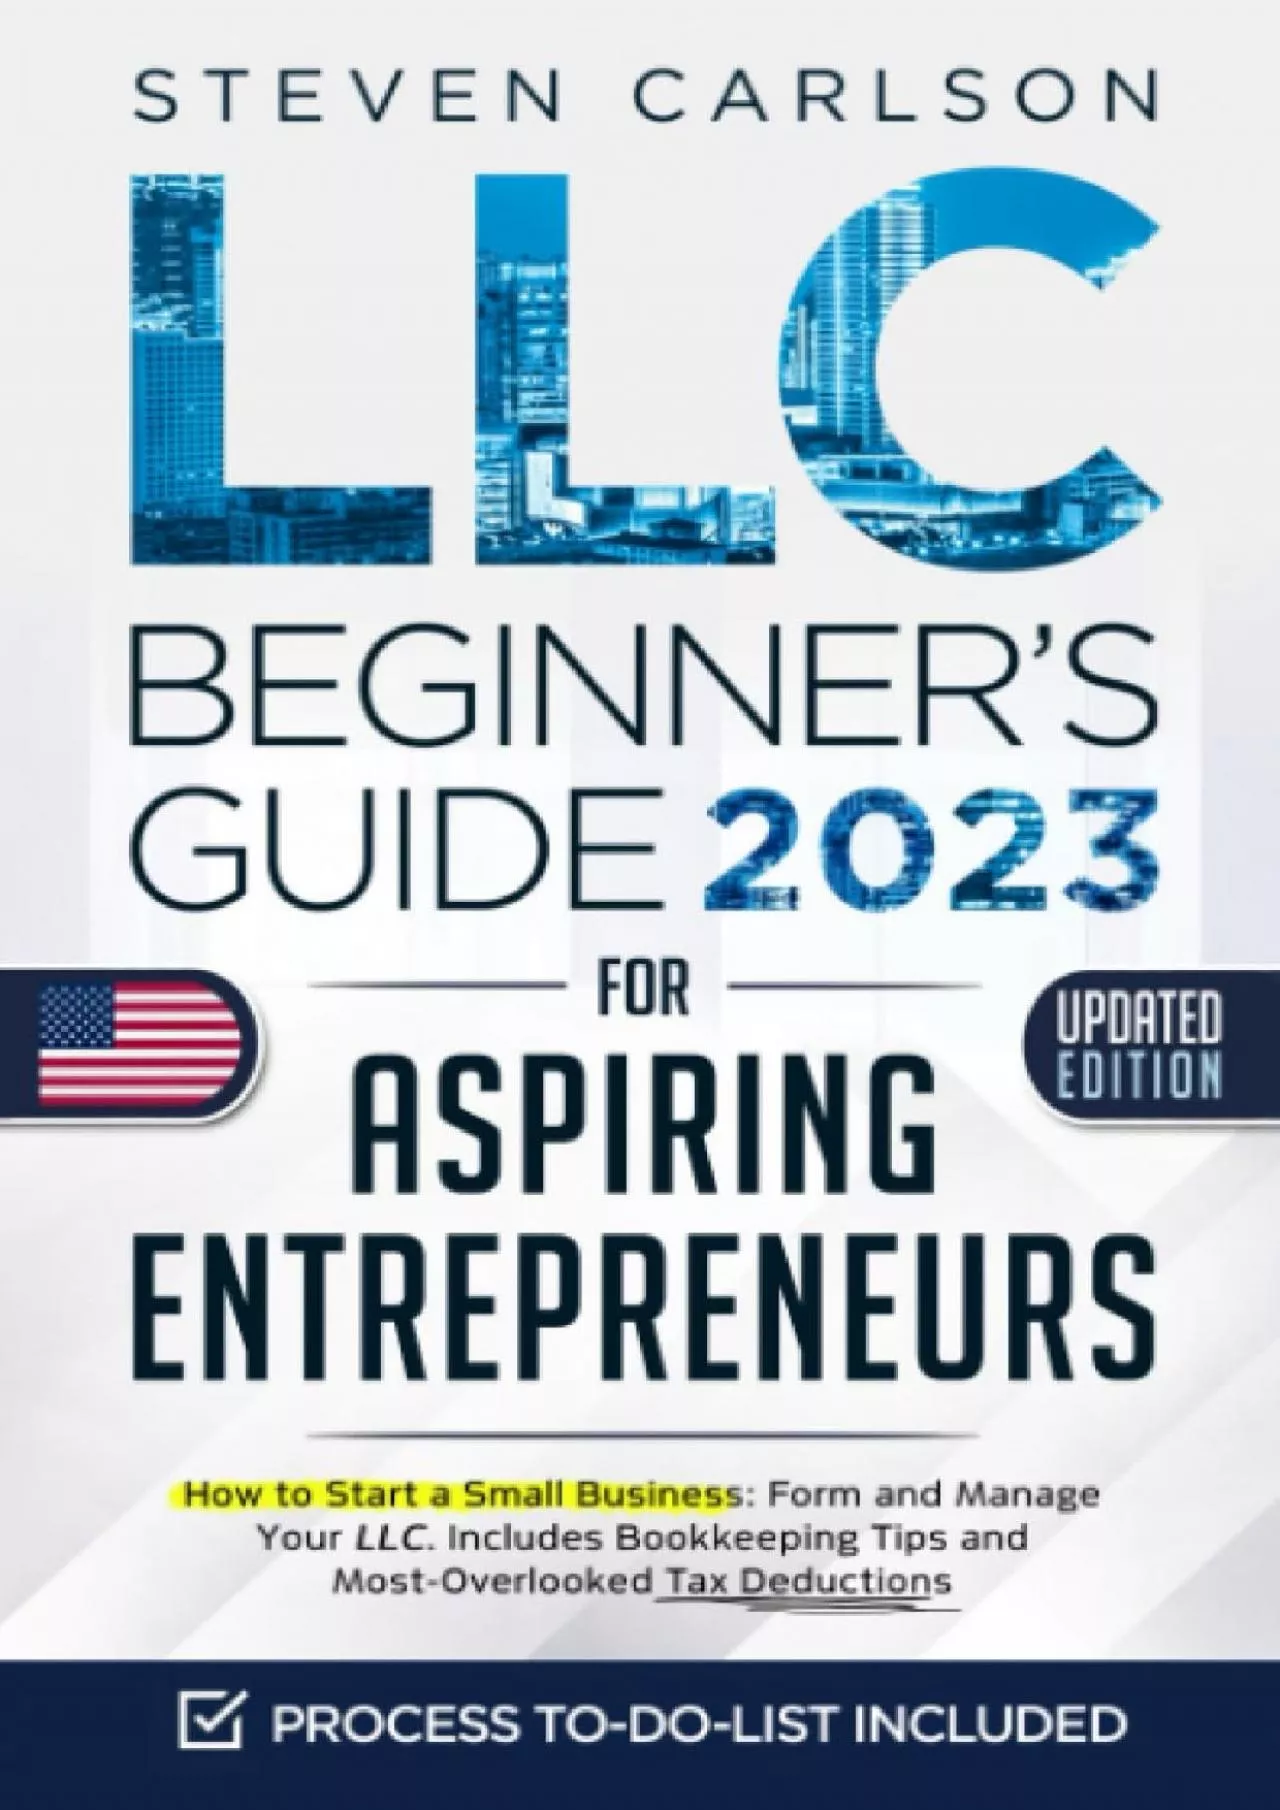 [DOWNLOAD] LLC Beginner’s Guide for Aspiring Entrepreneurs, Updated Edition: How to